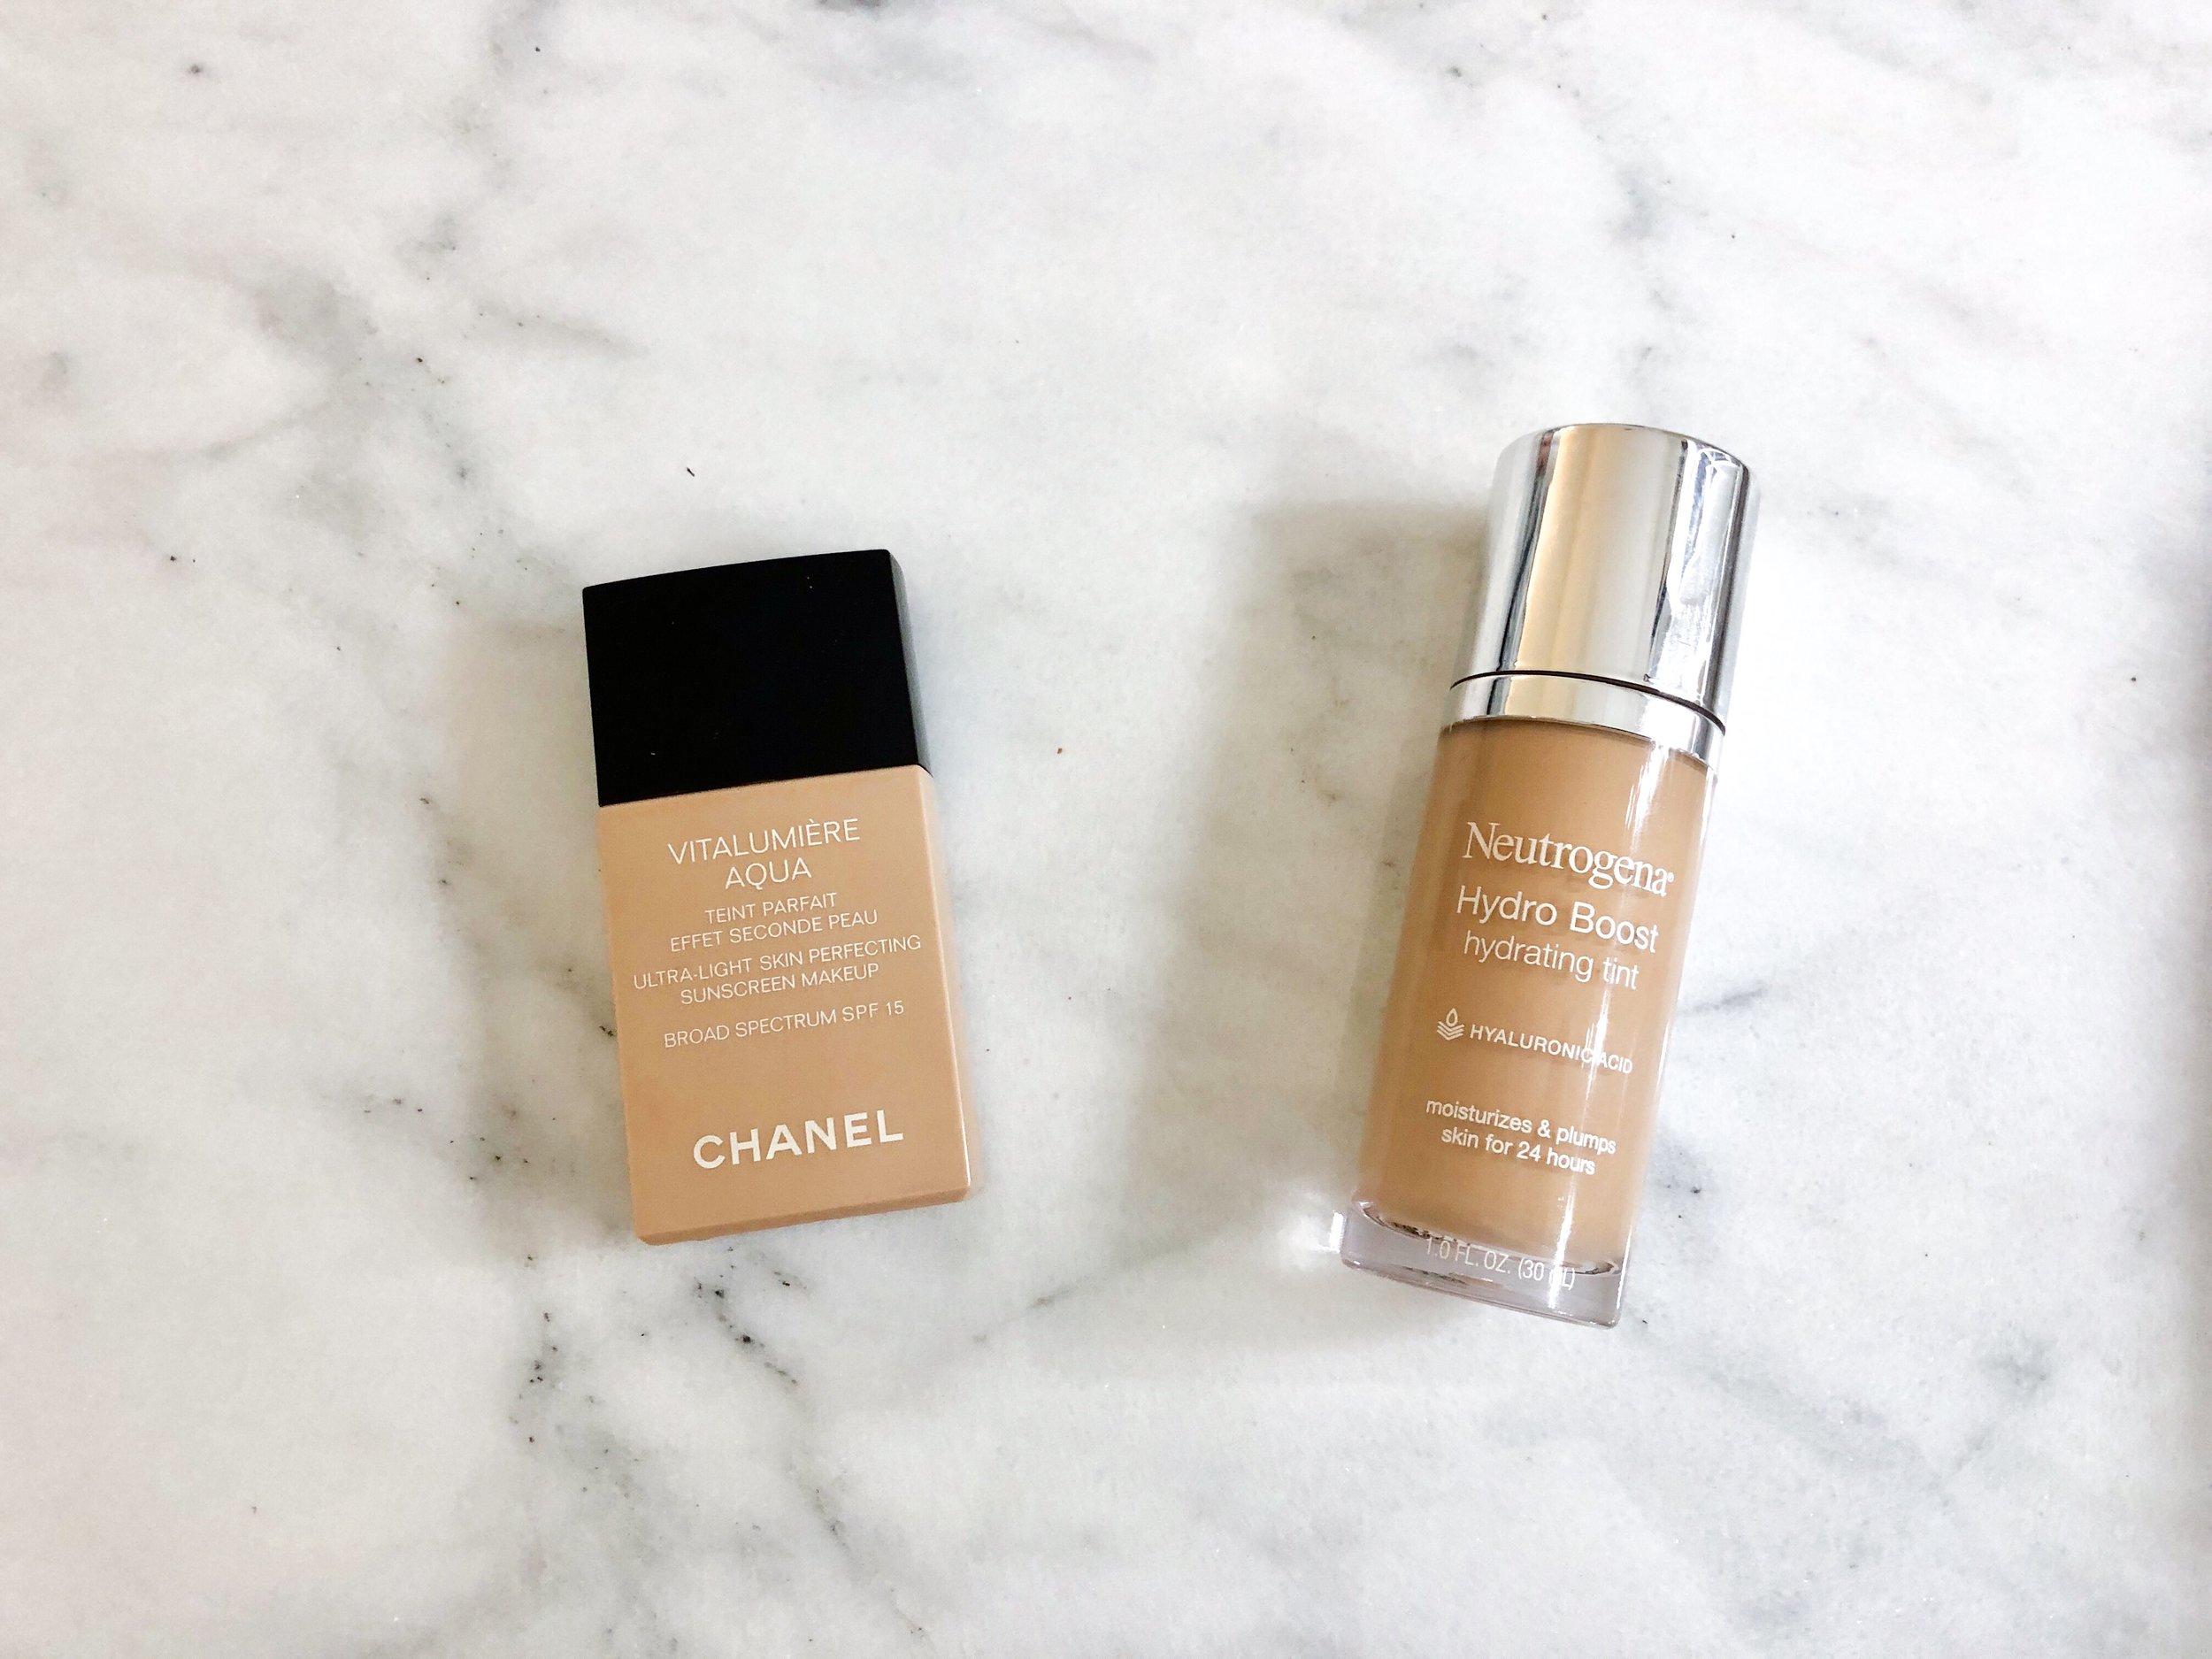 Chanel Vitalumiere Aqua Ultra-Light Skin Perfecting Sunscreen Makeup, SPF 15, Beige 20 - 1 oz bottle